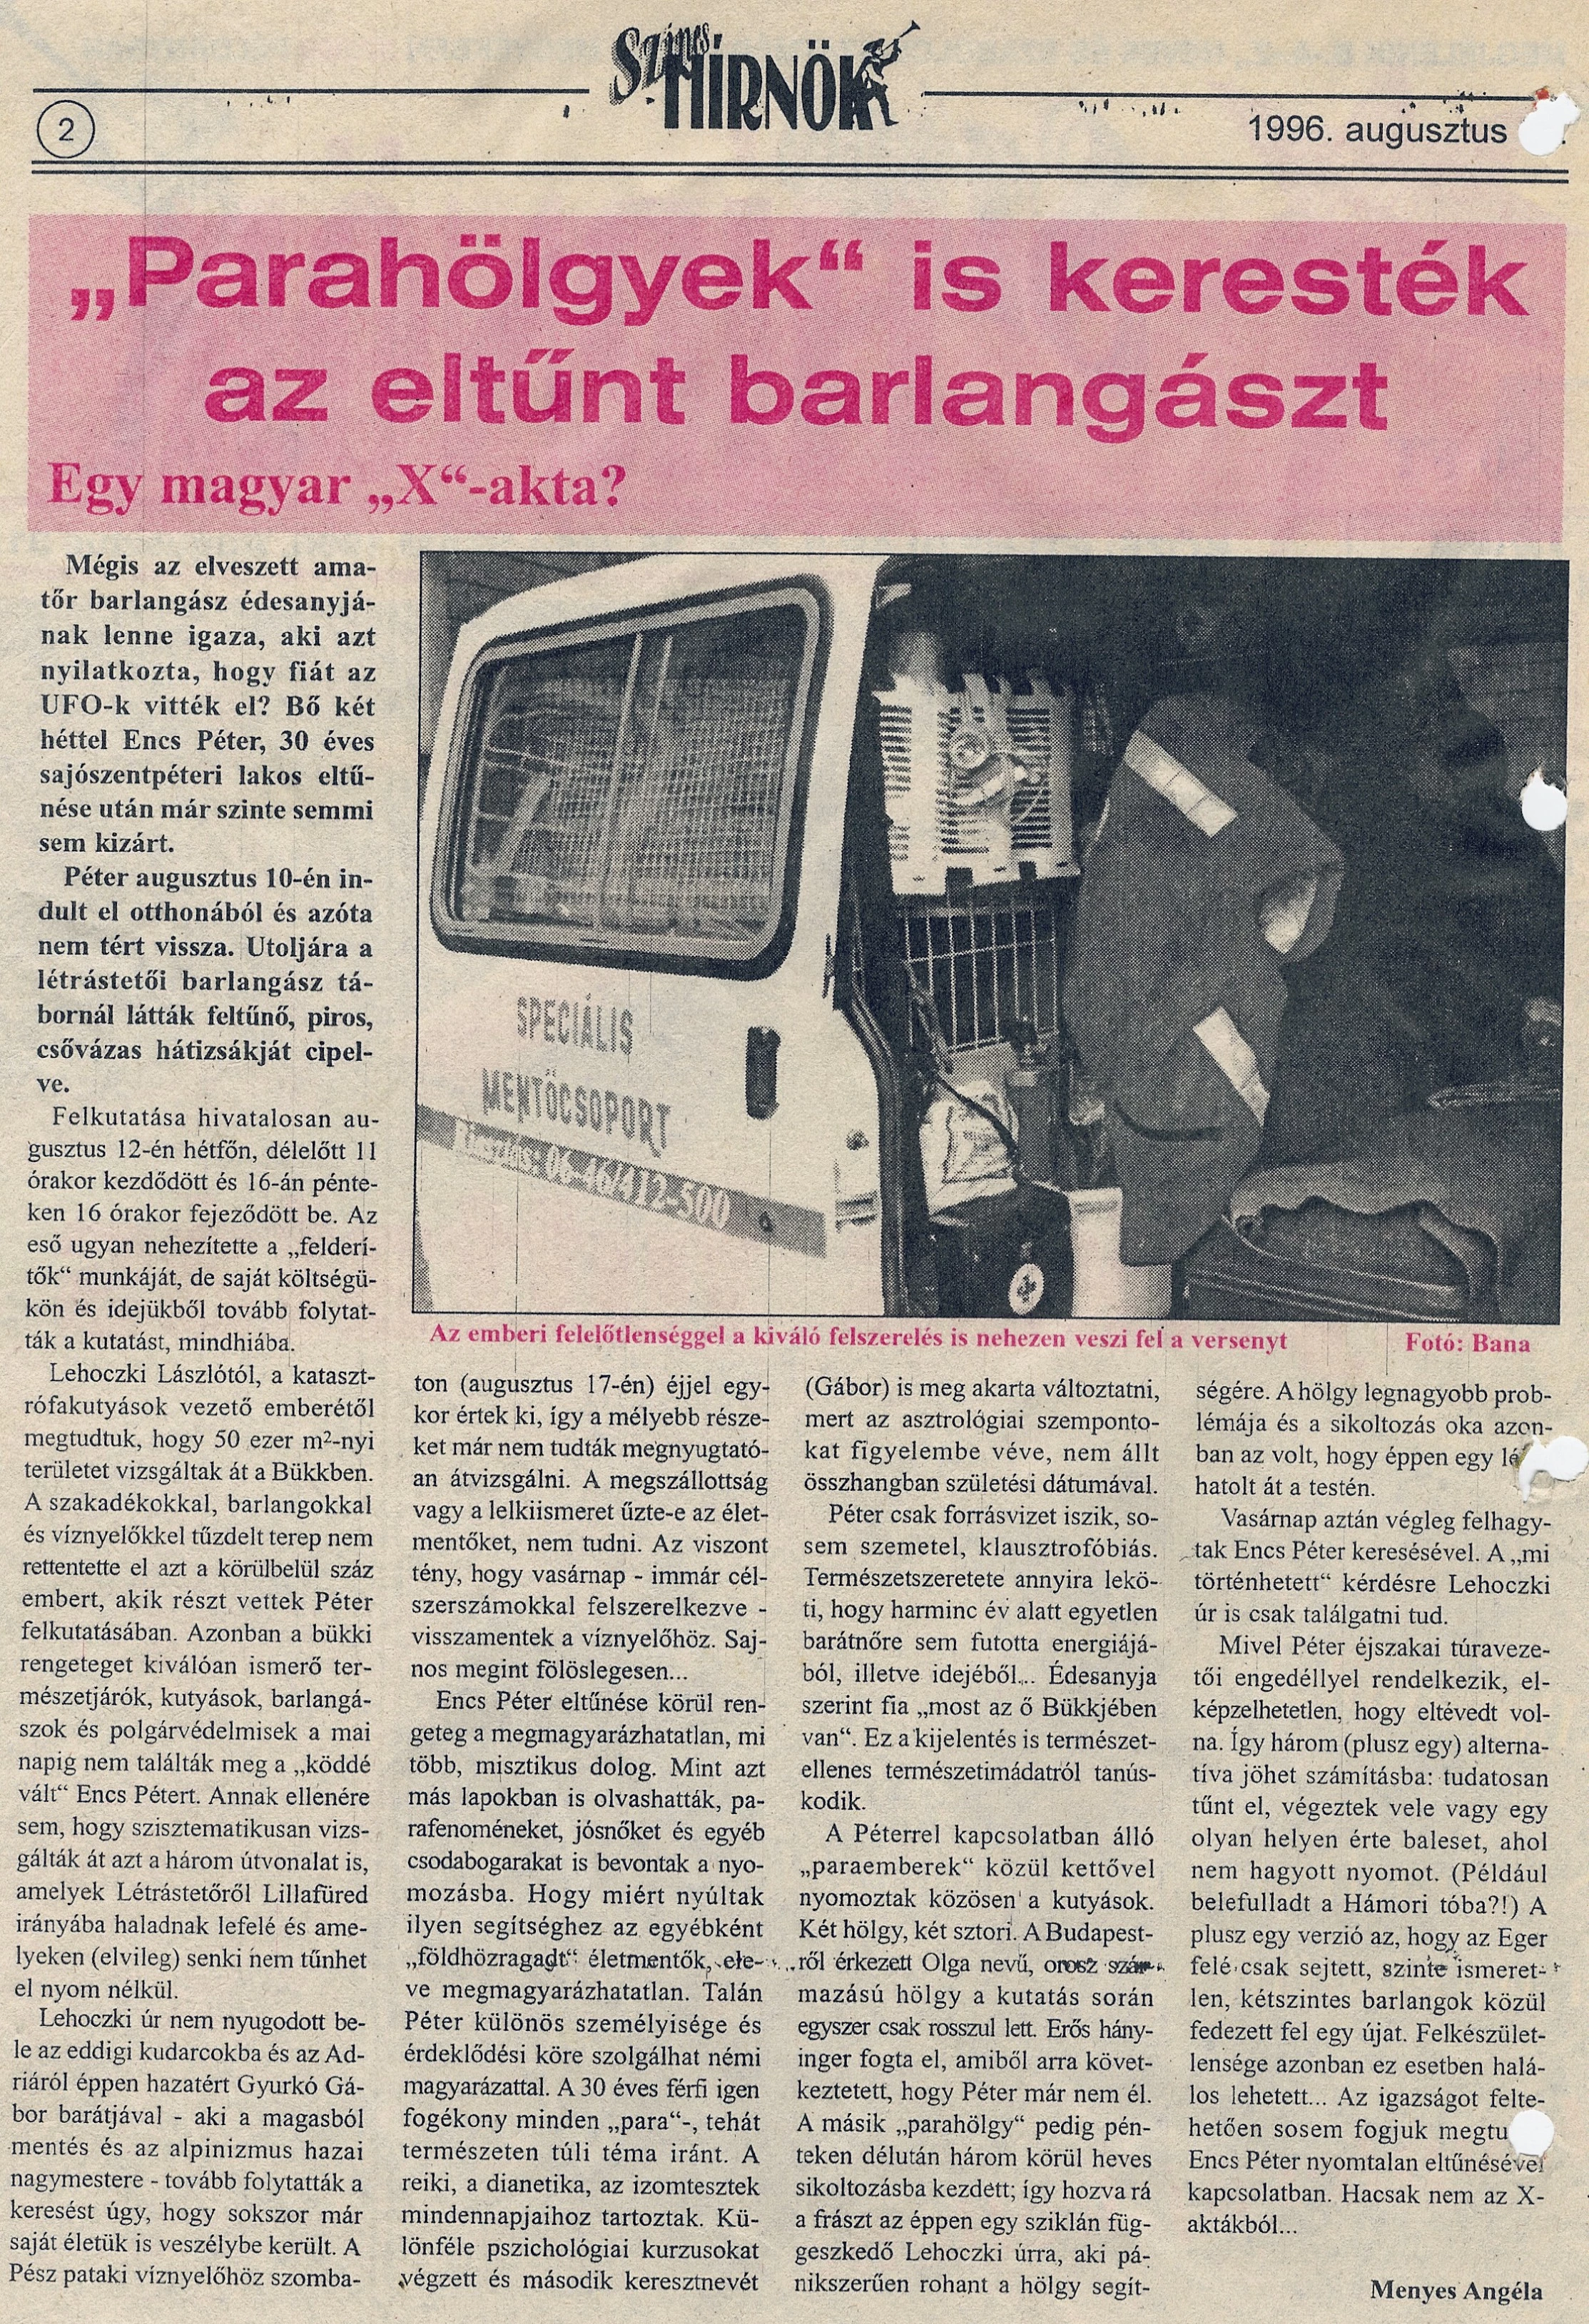 1996 Miskolc